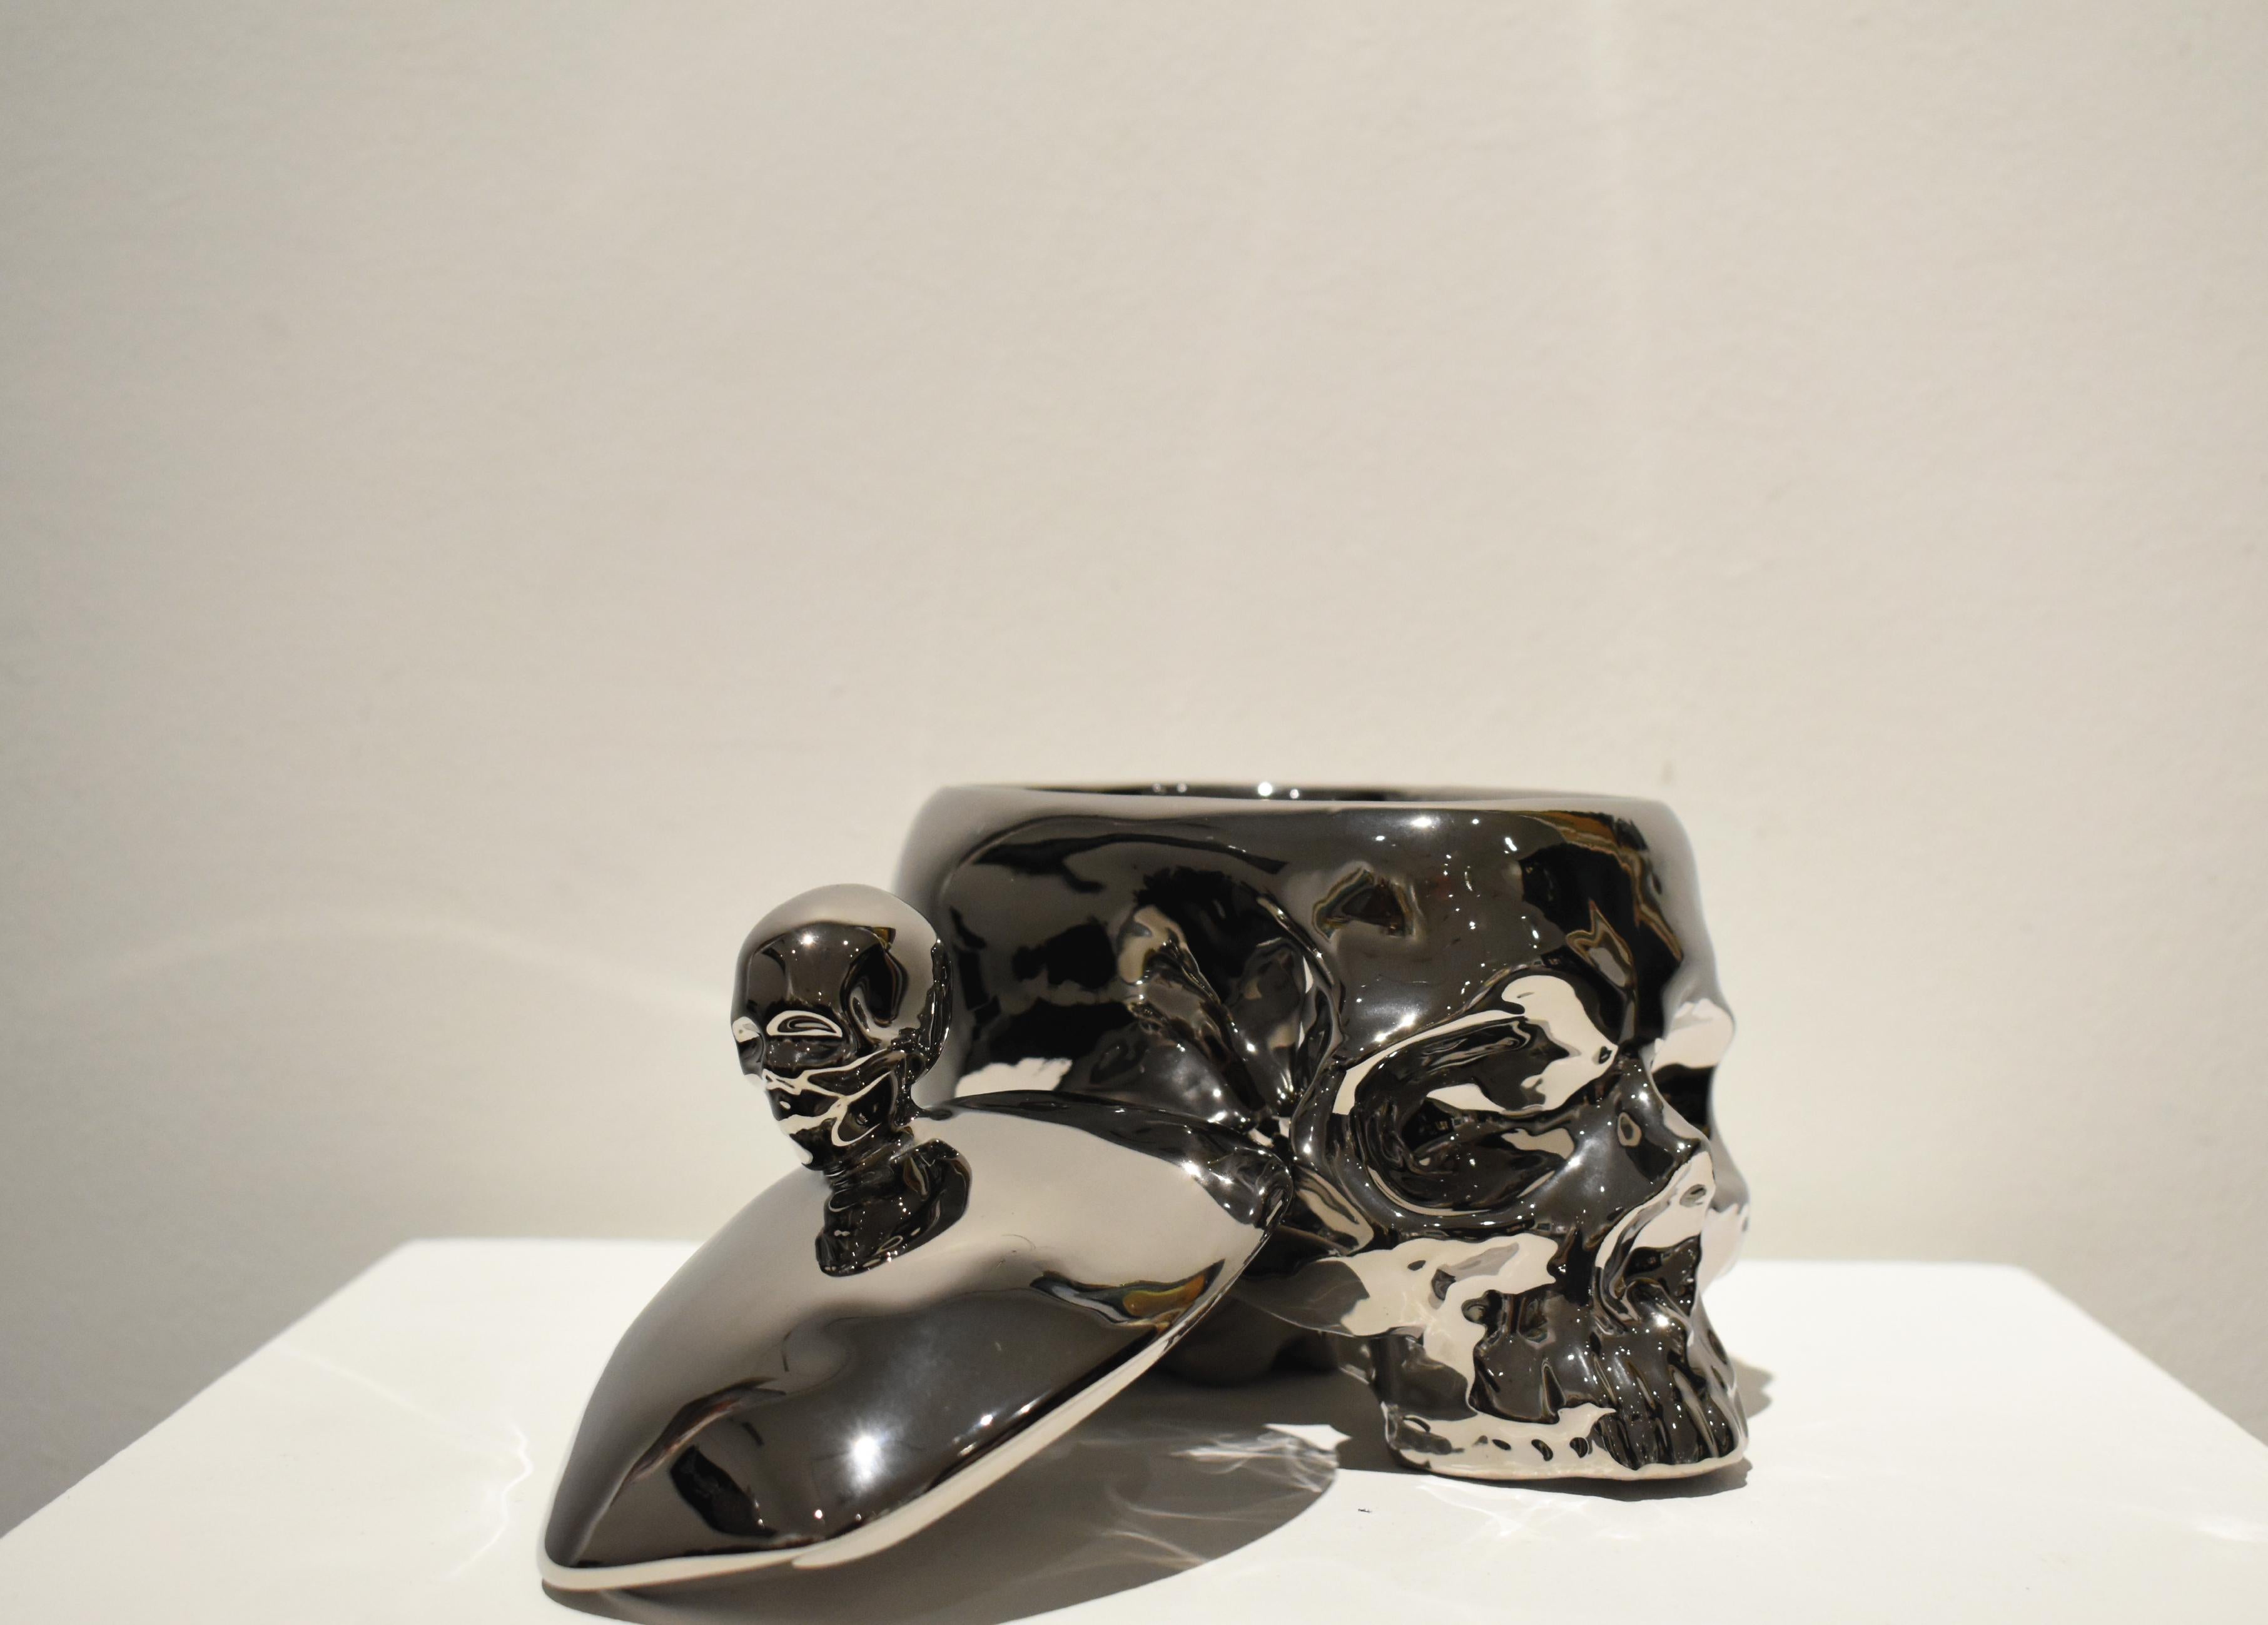 Porzellanskulptur mit Totenkopfform in Silberfarbe, abnehmbarer Deckel (Schwarz), Figurative Sculpture, von Huang Yulong